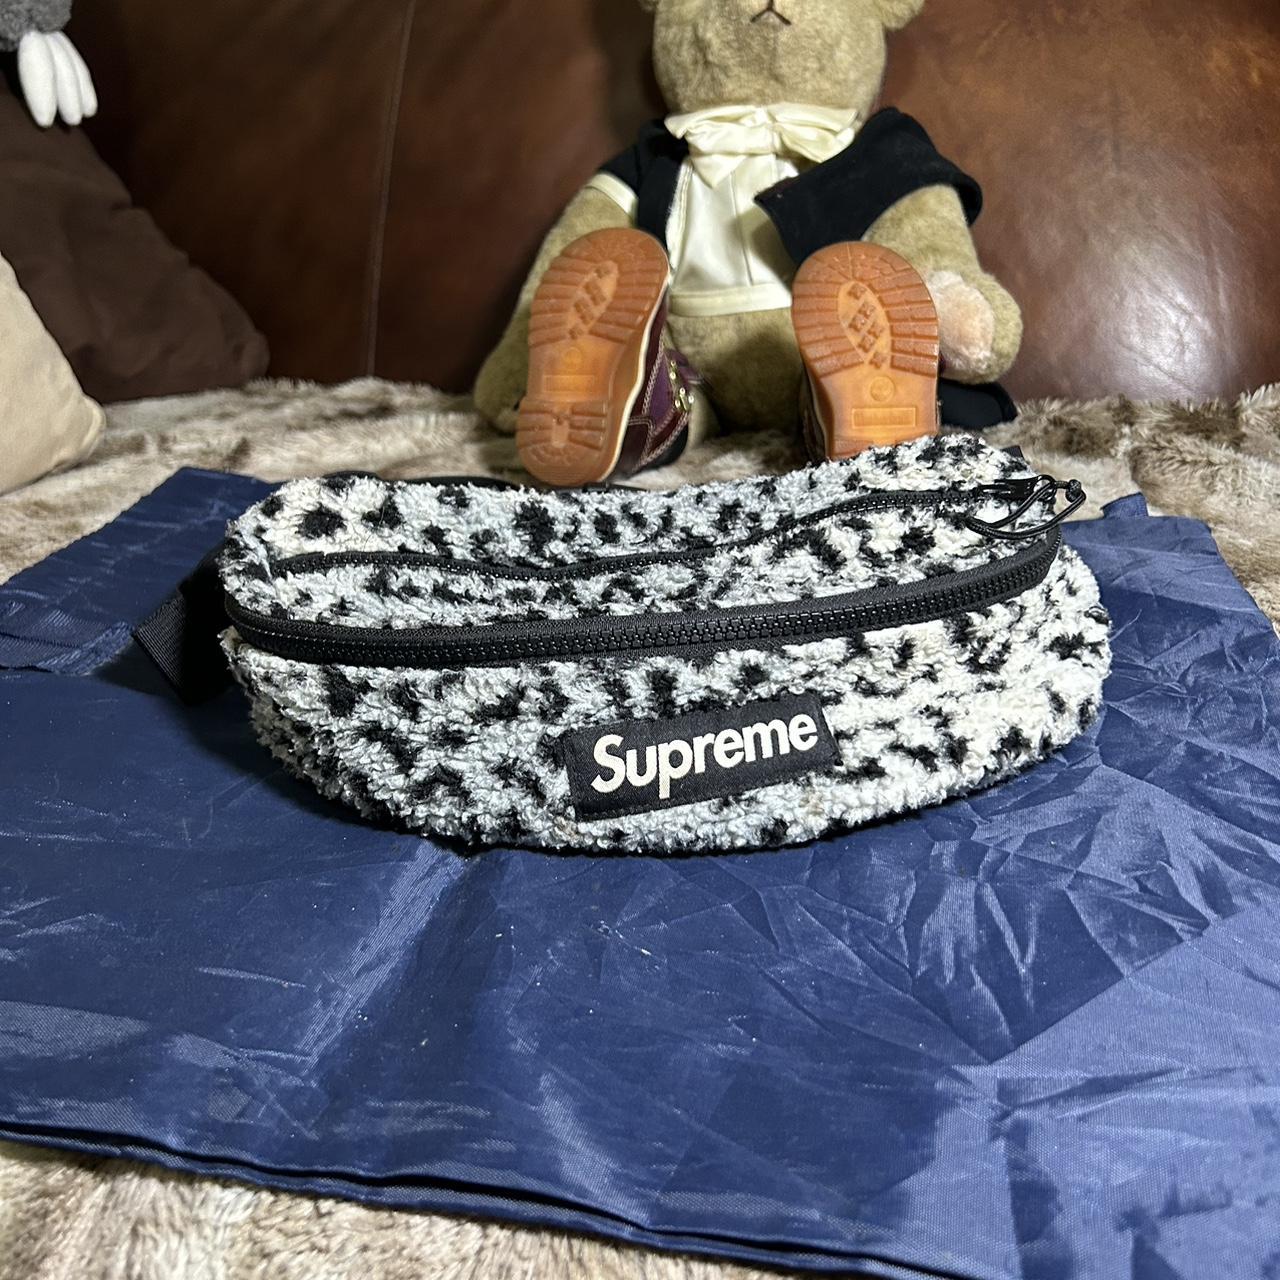 Supreme Fanny pack #cheetahprint #supreme - Depop